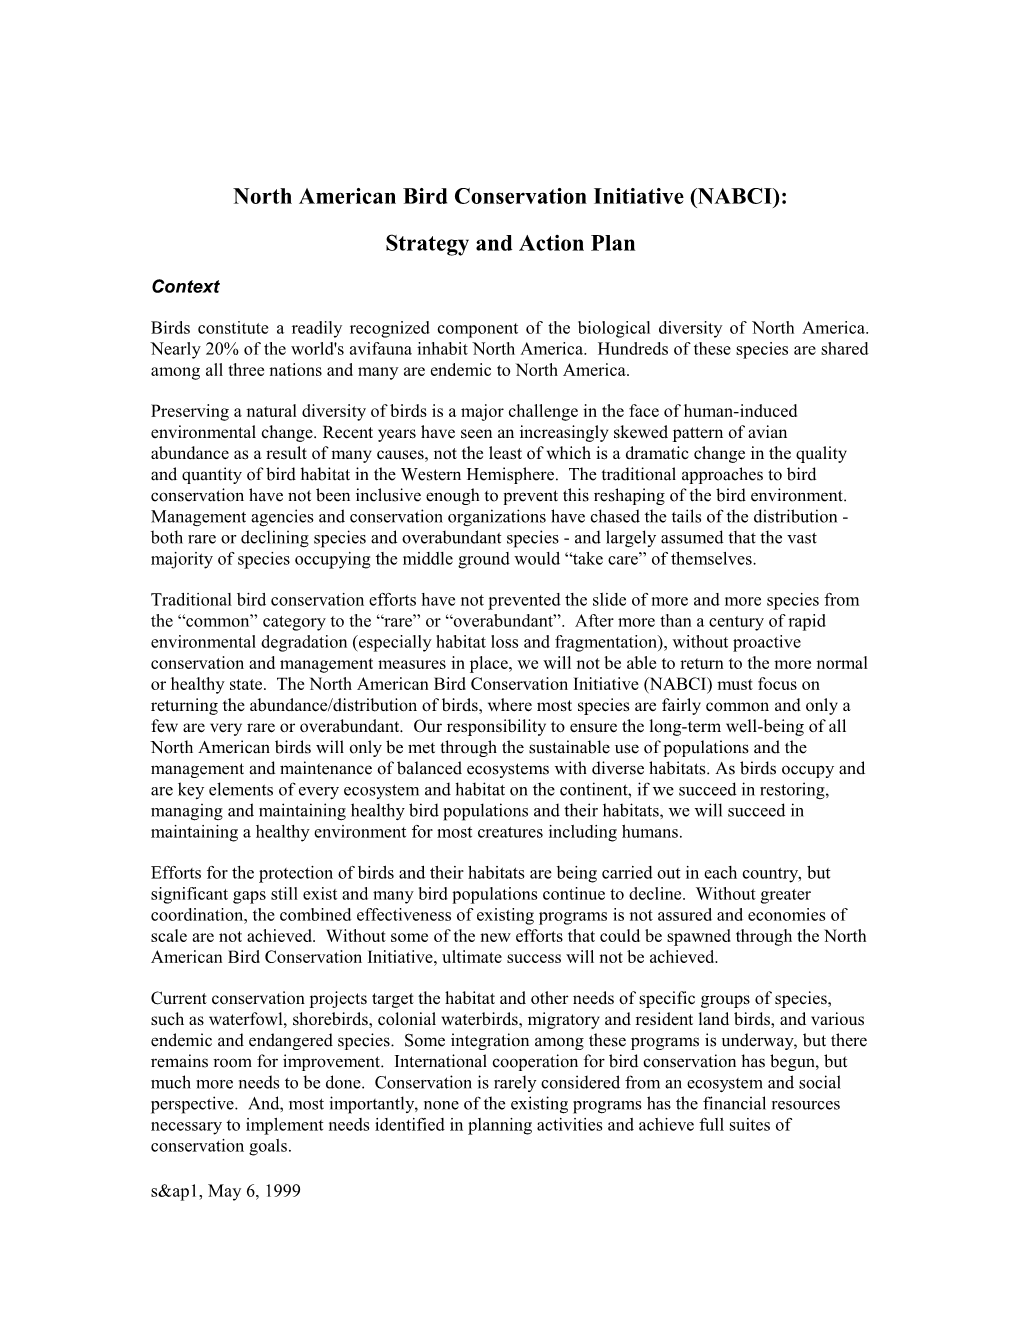 North American Bird Conservation Initiative (NABCI)